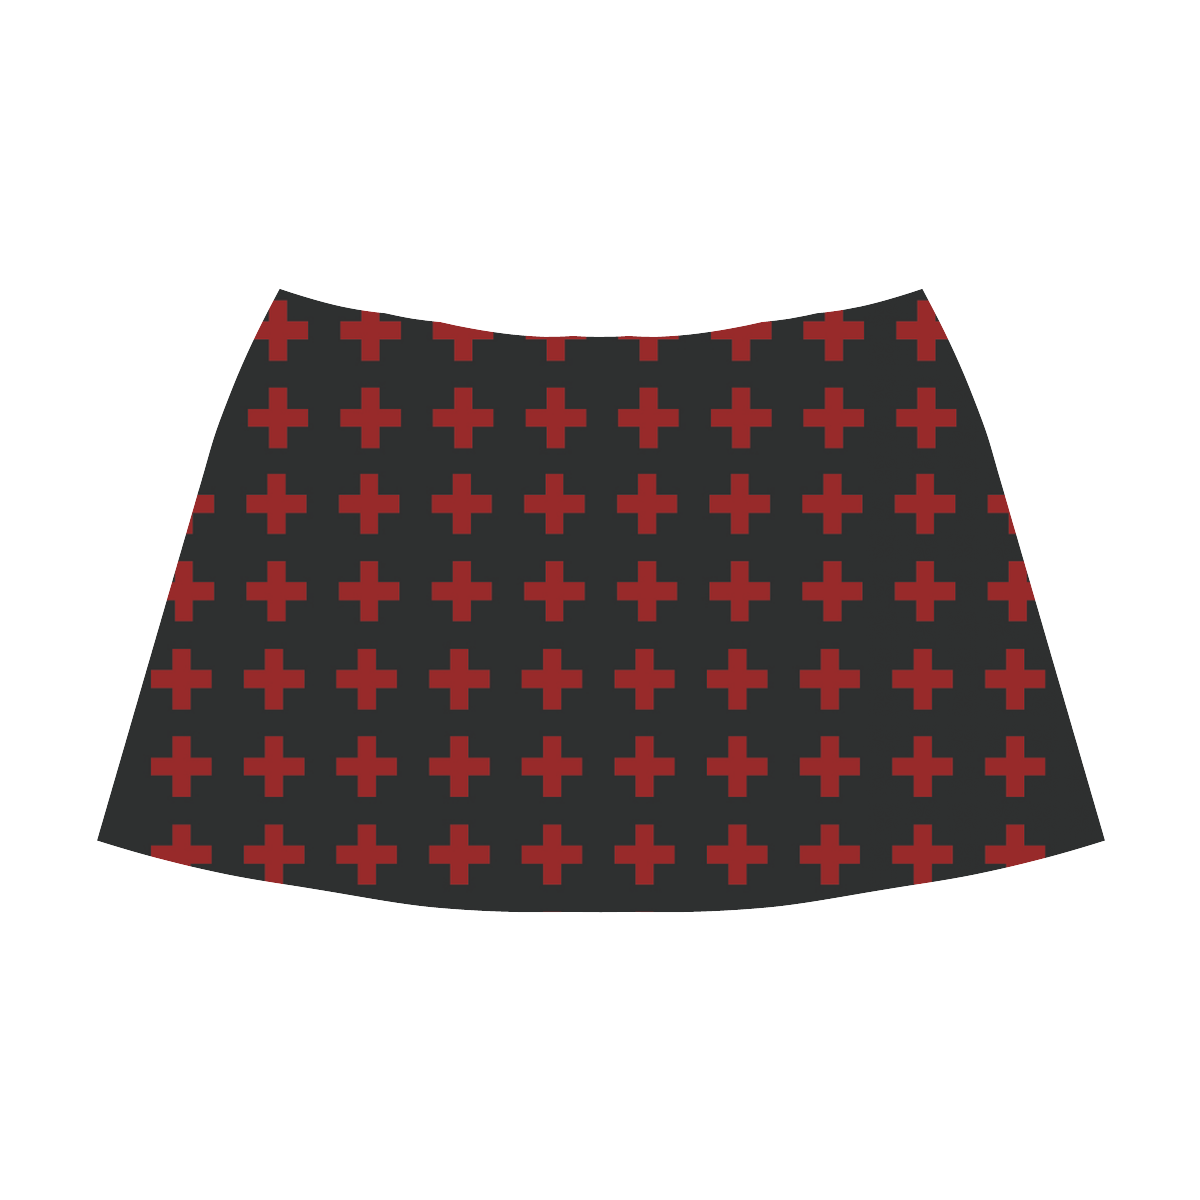 Crosses Punk Rock style Mnemosyne Women's Crepe Skirt (Model D16)